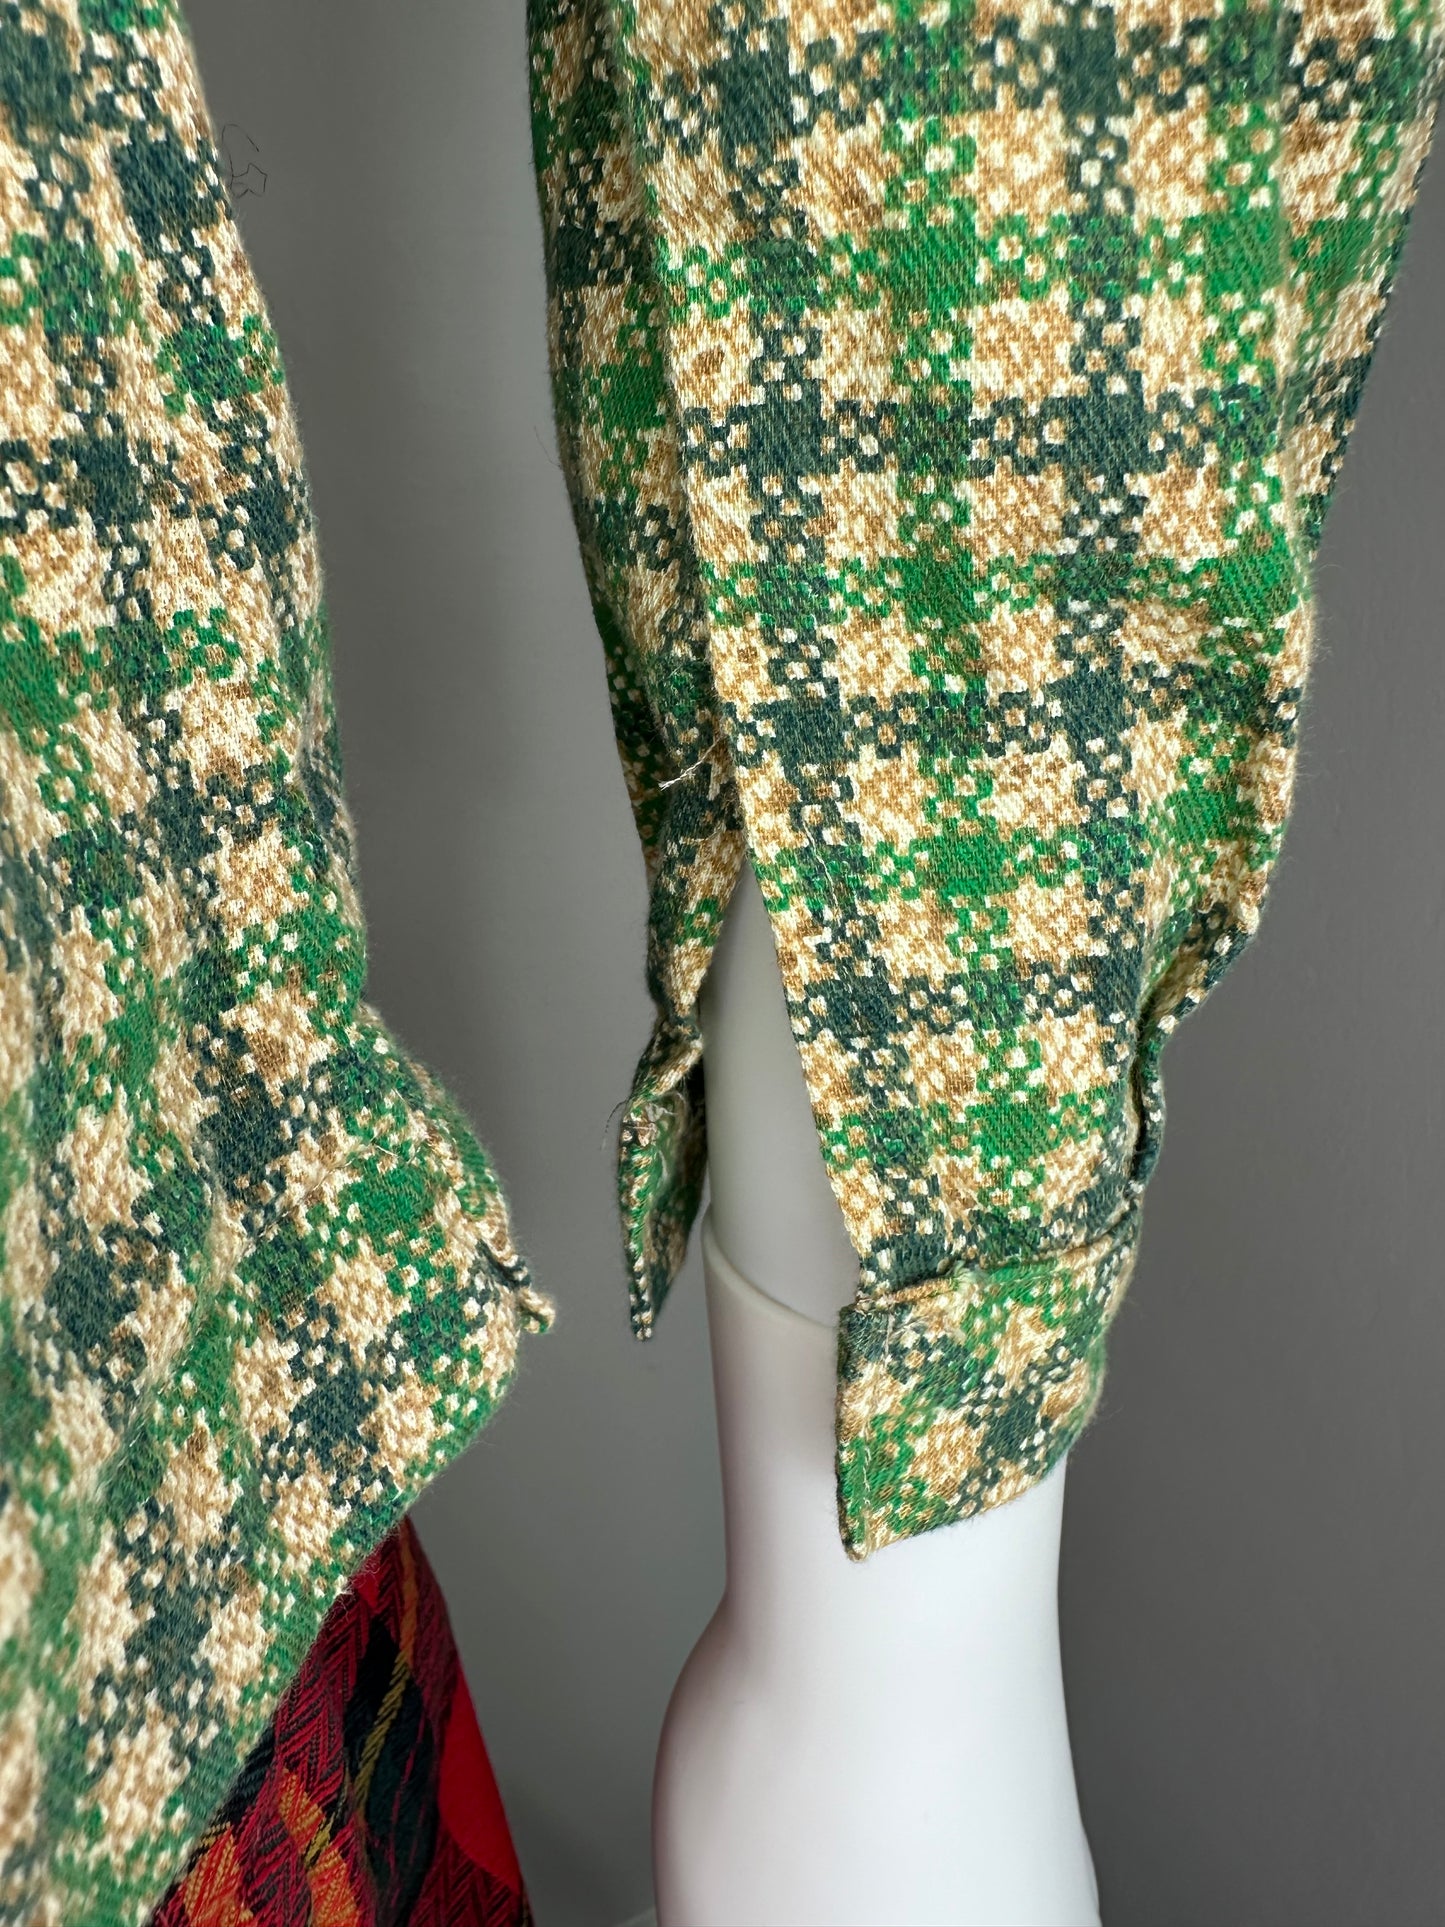 1950s/60s Green Printed Plaid Blouse, Handmade Size Medium